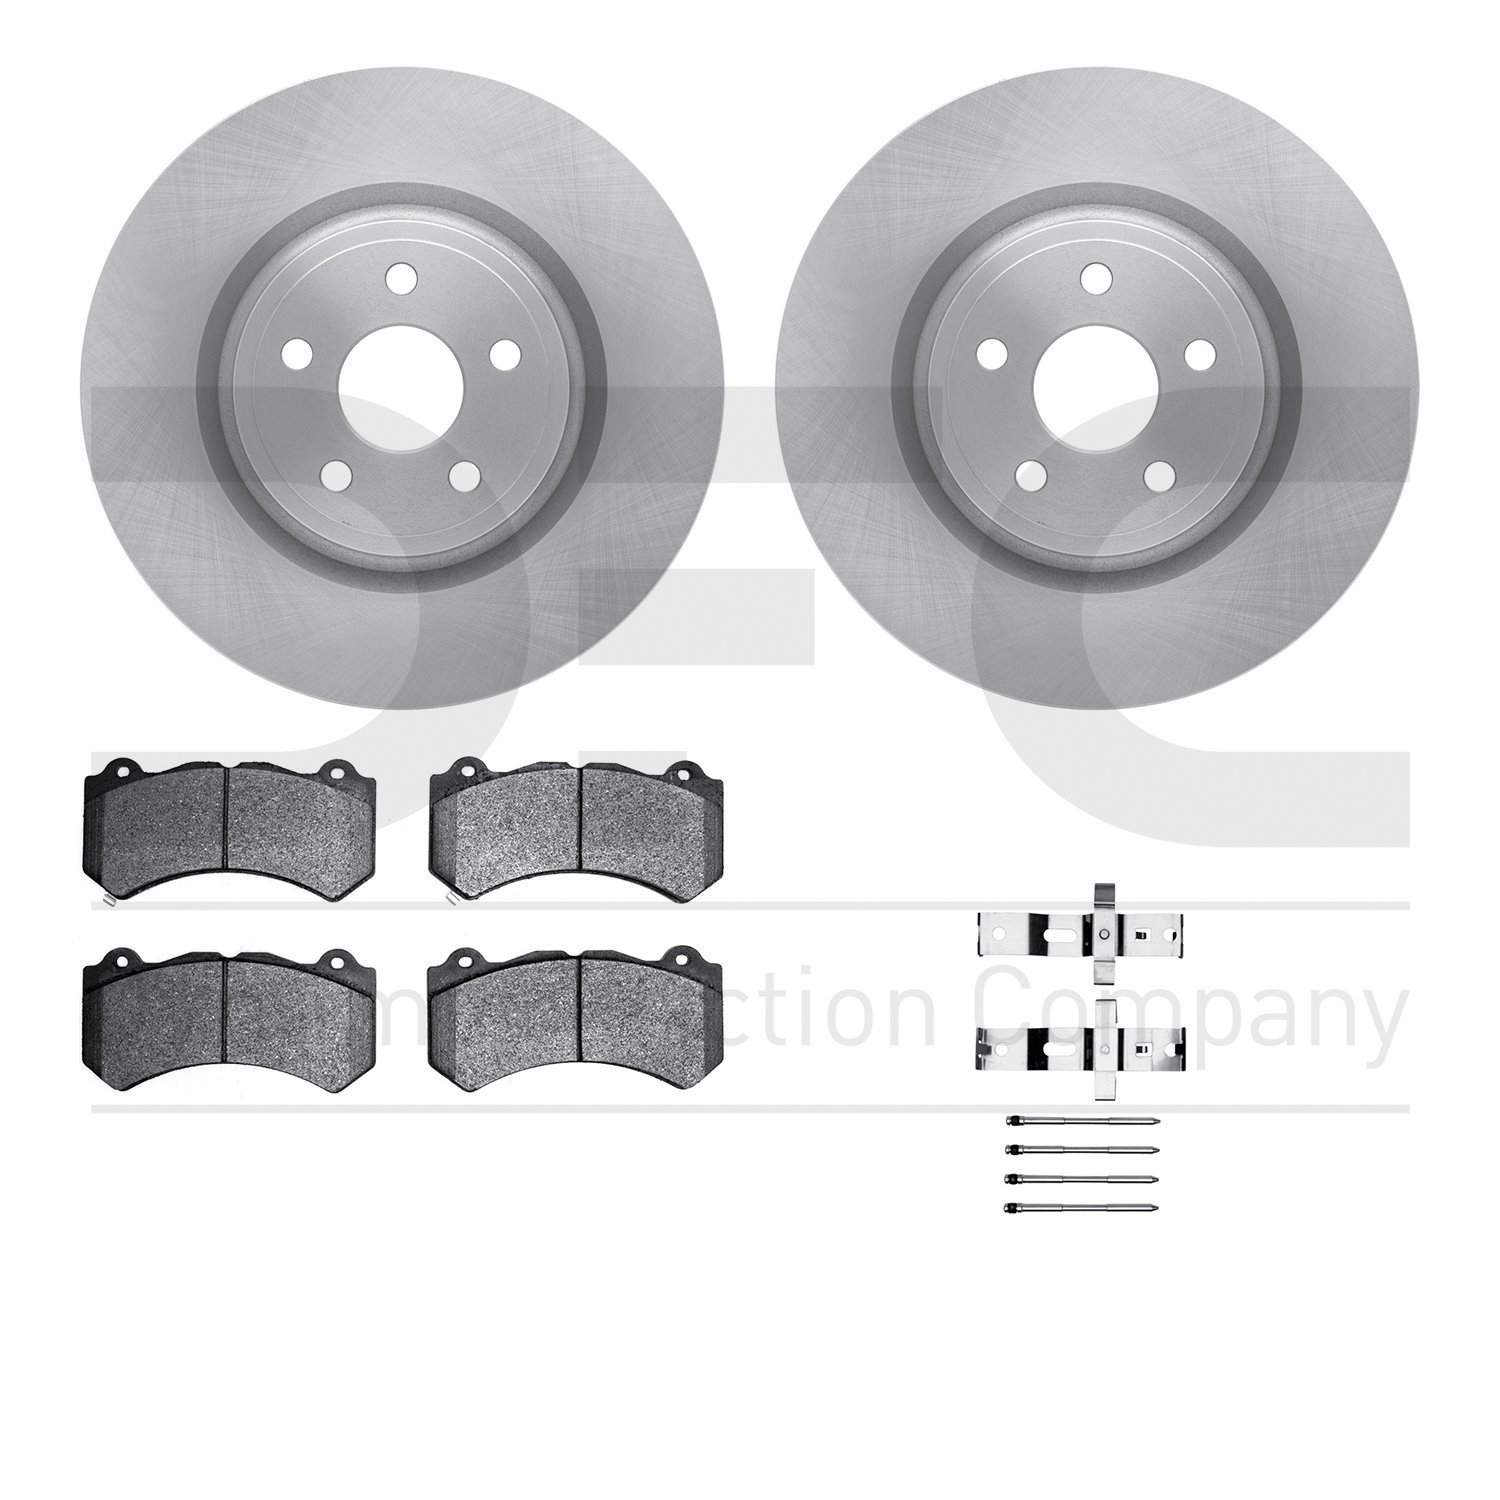 6612-42025 Brake Rotors w/5000 Euro Ceramic Brake Pads Kit with Hardware, Fits Select Mopar, Position: Front